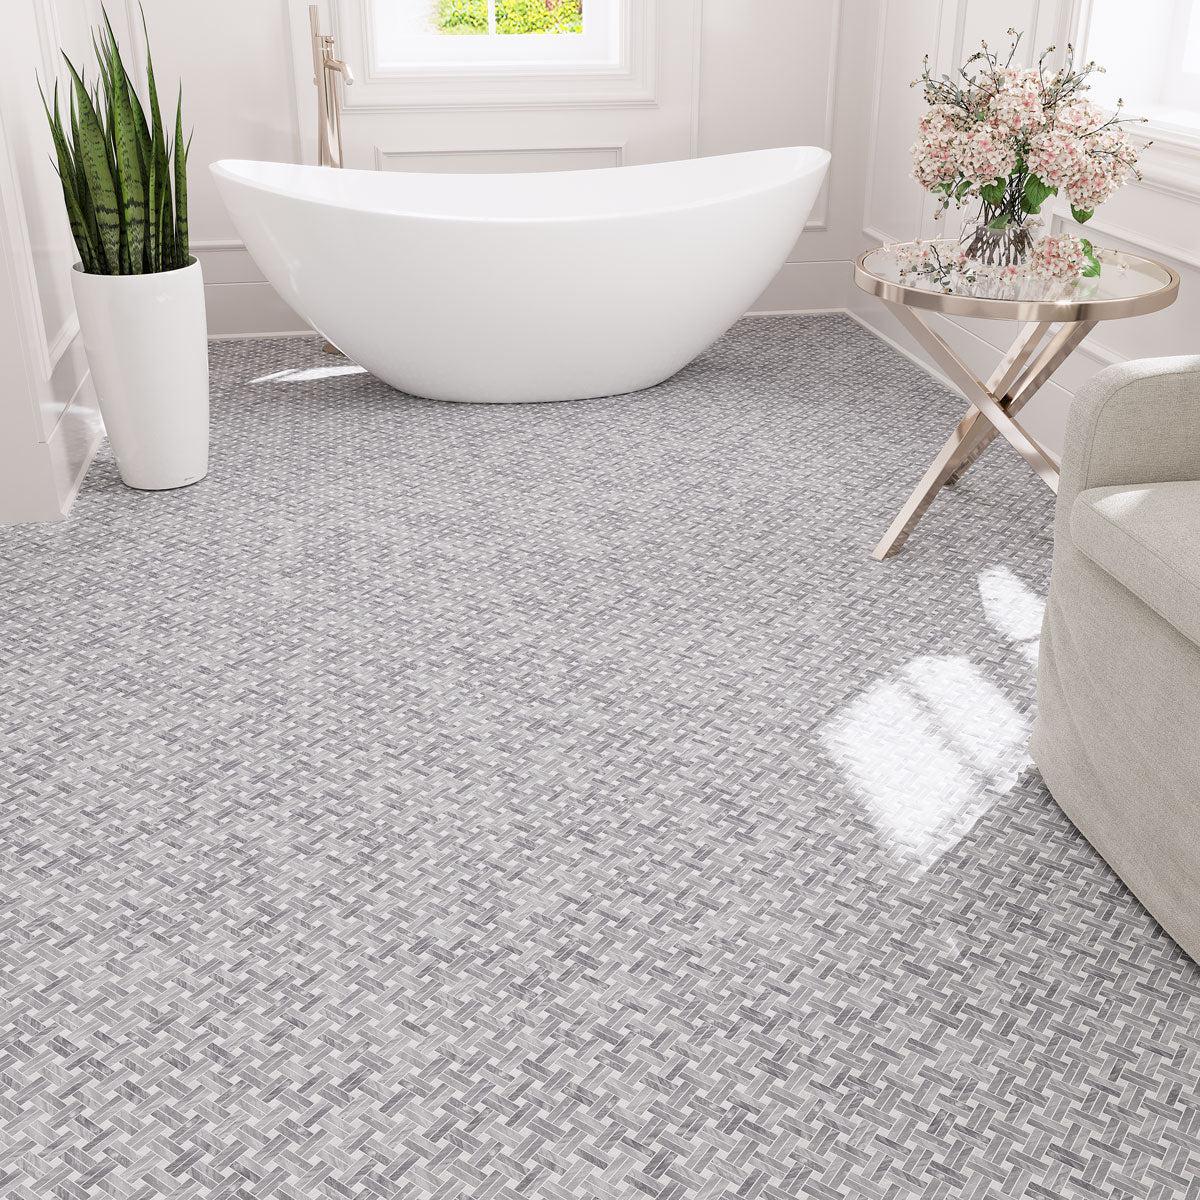 Gray and white double basket weave bathroom floor tile